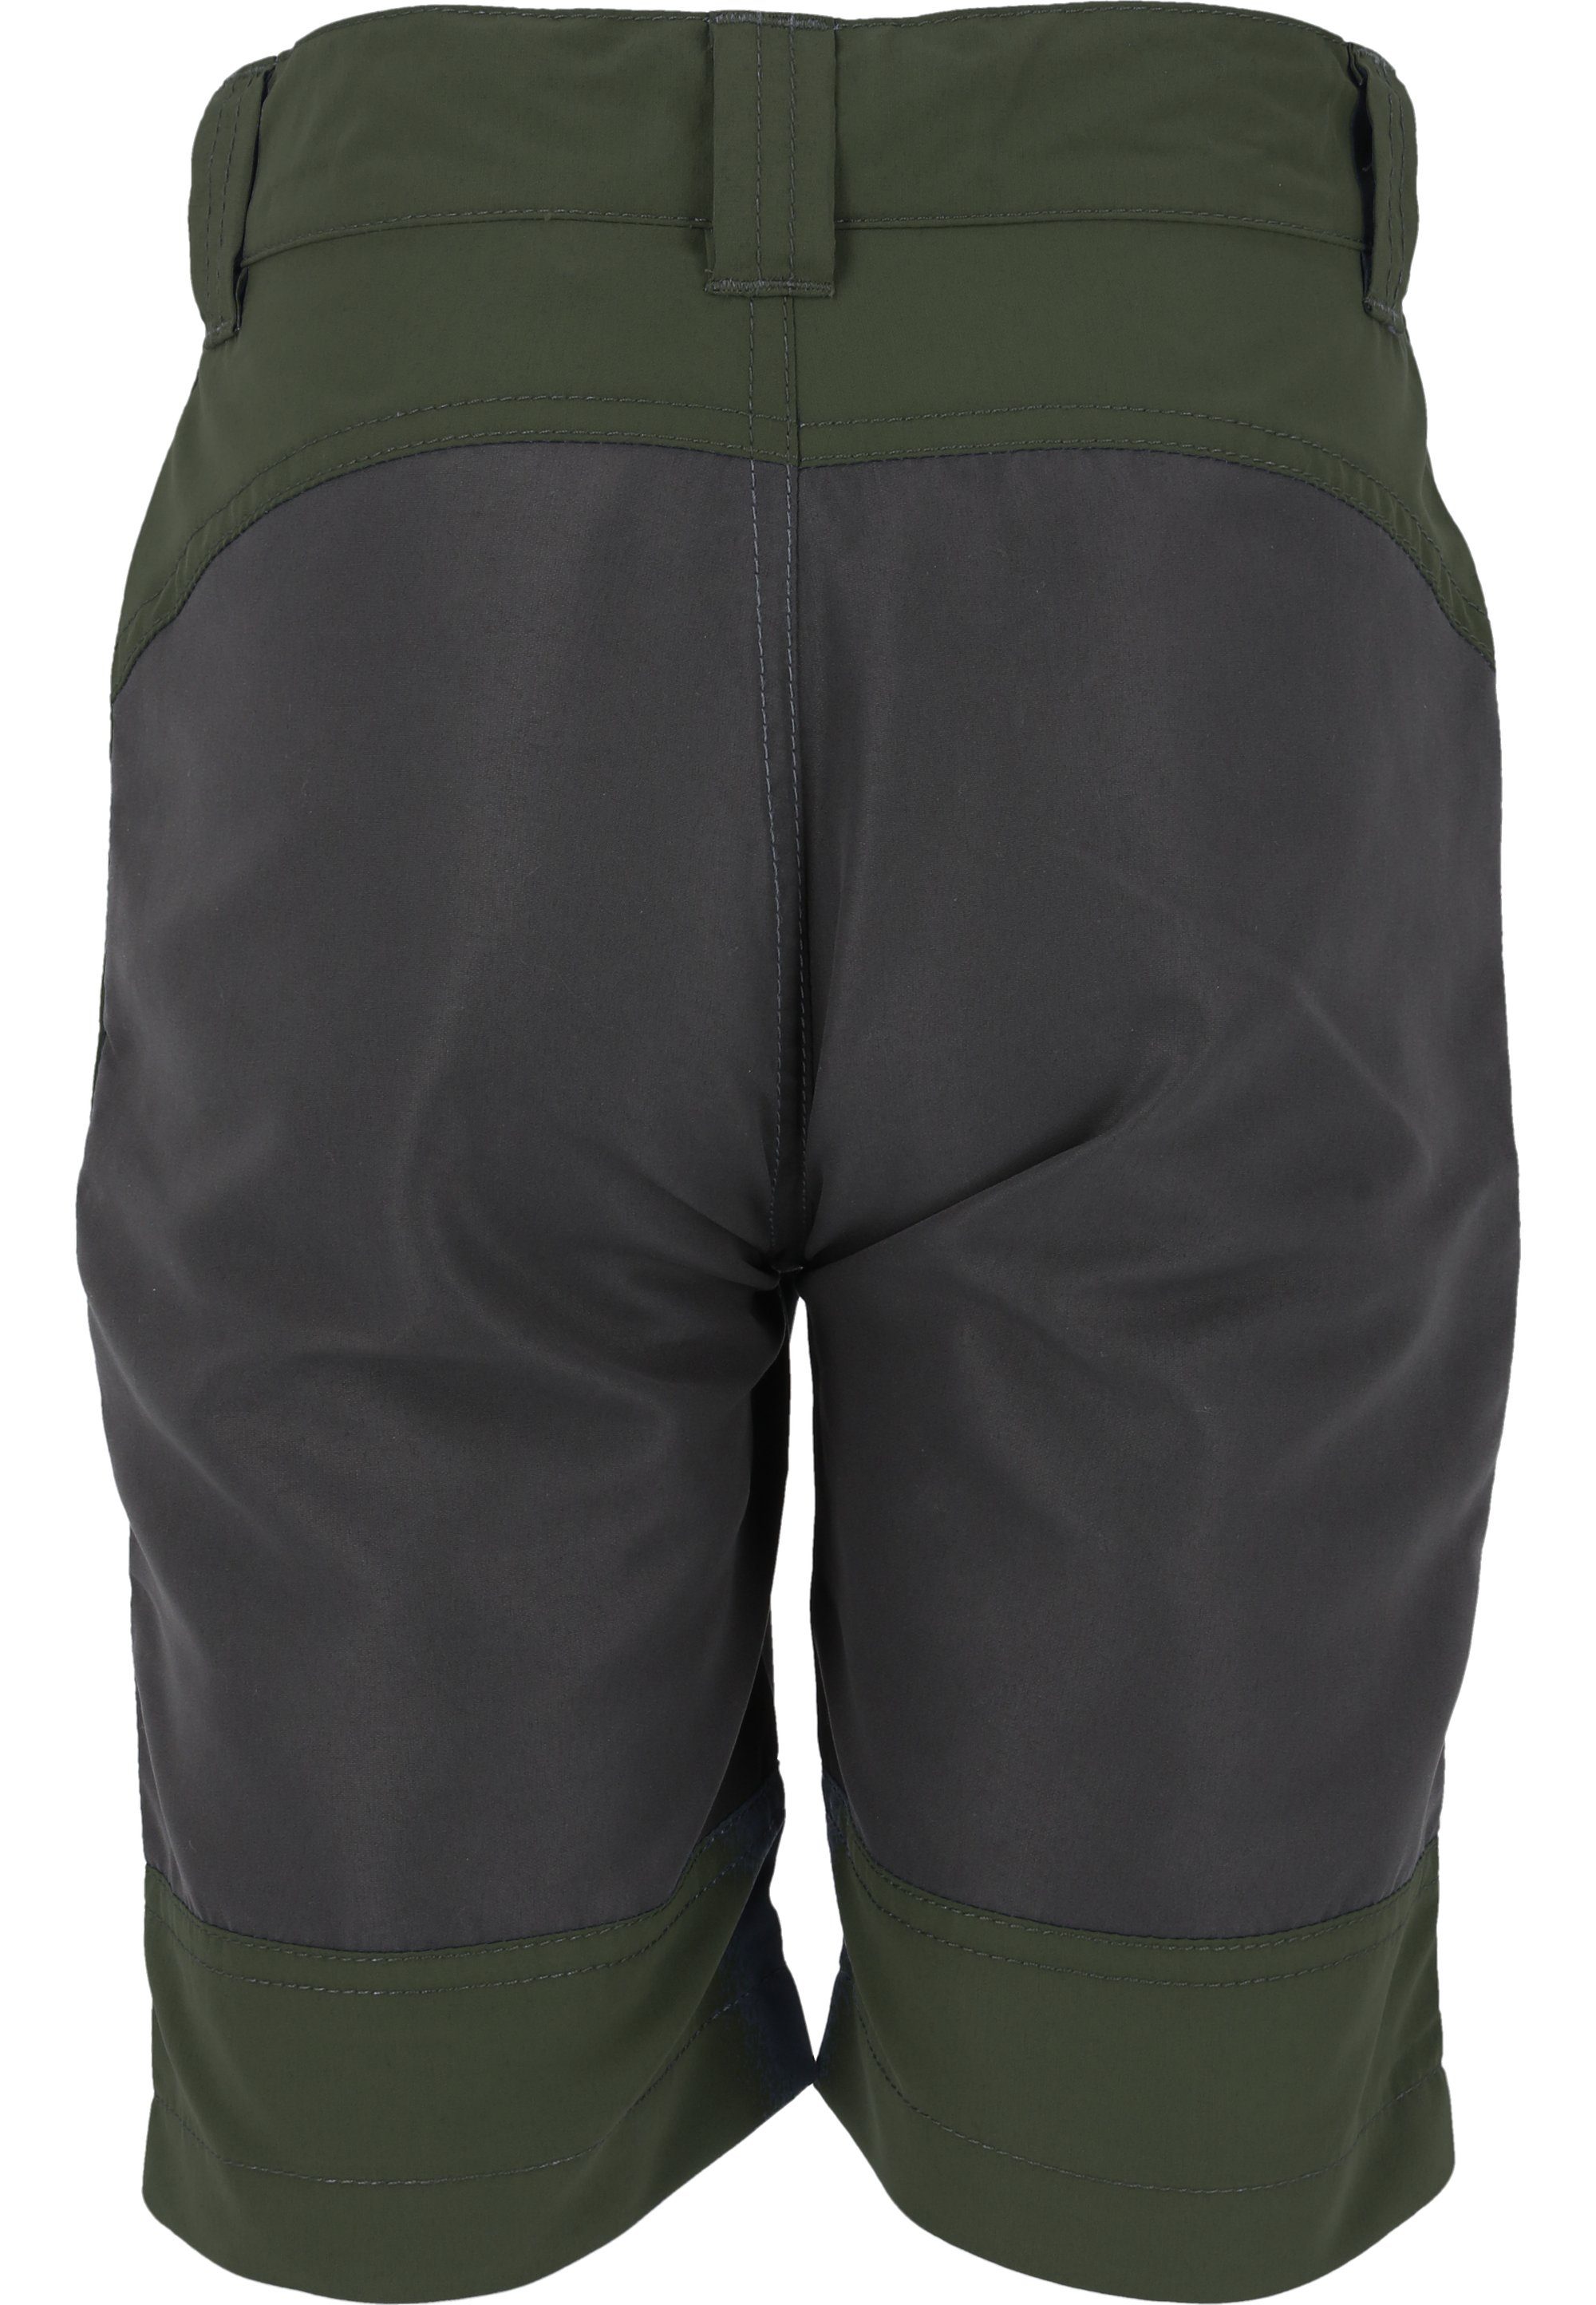 Material olivgrün-schwarz Atlantic Shorts ZIGZAG aus robustem